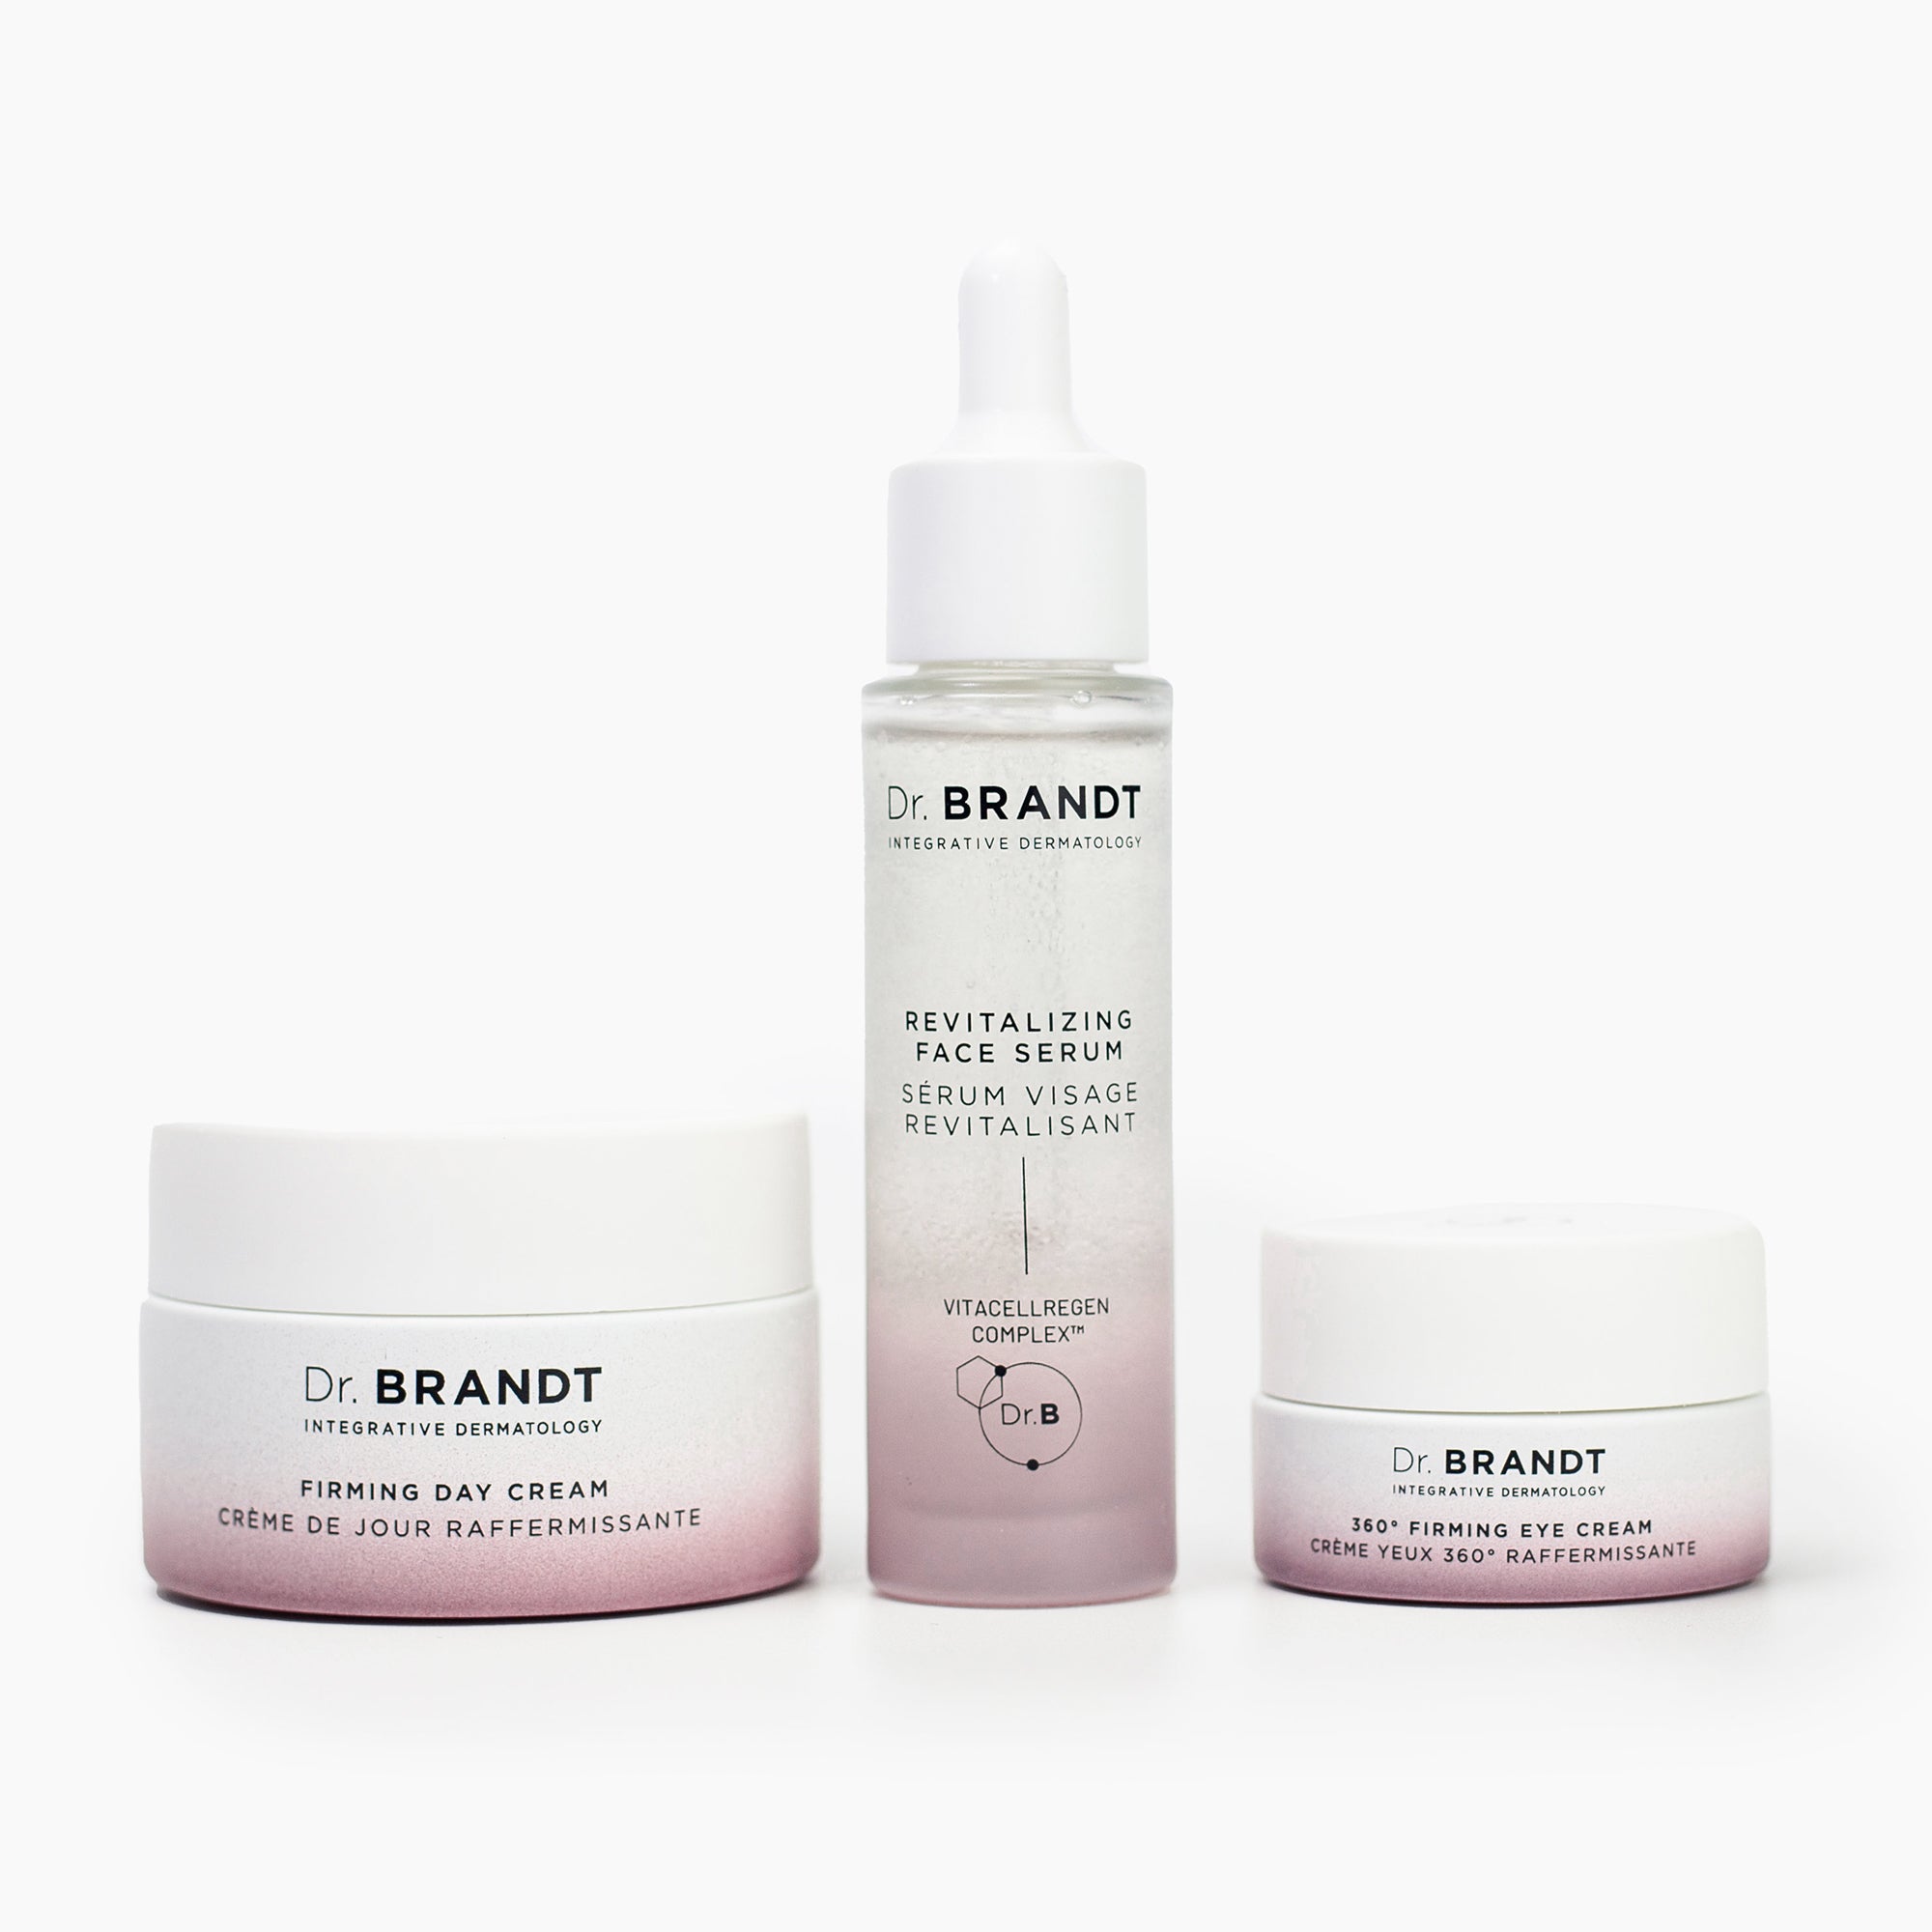 Dr. Brandt Skincare lineless cream age-inhibitor complex